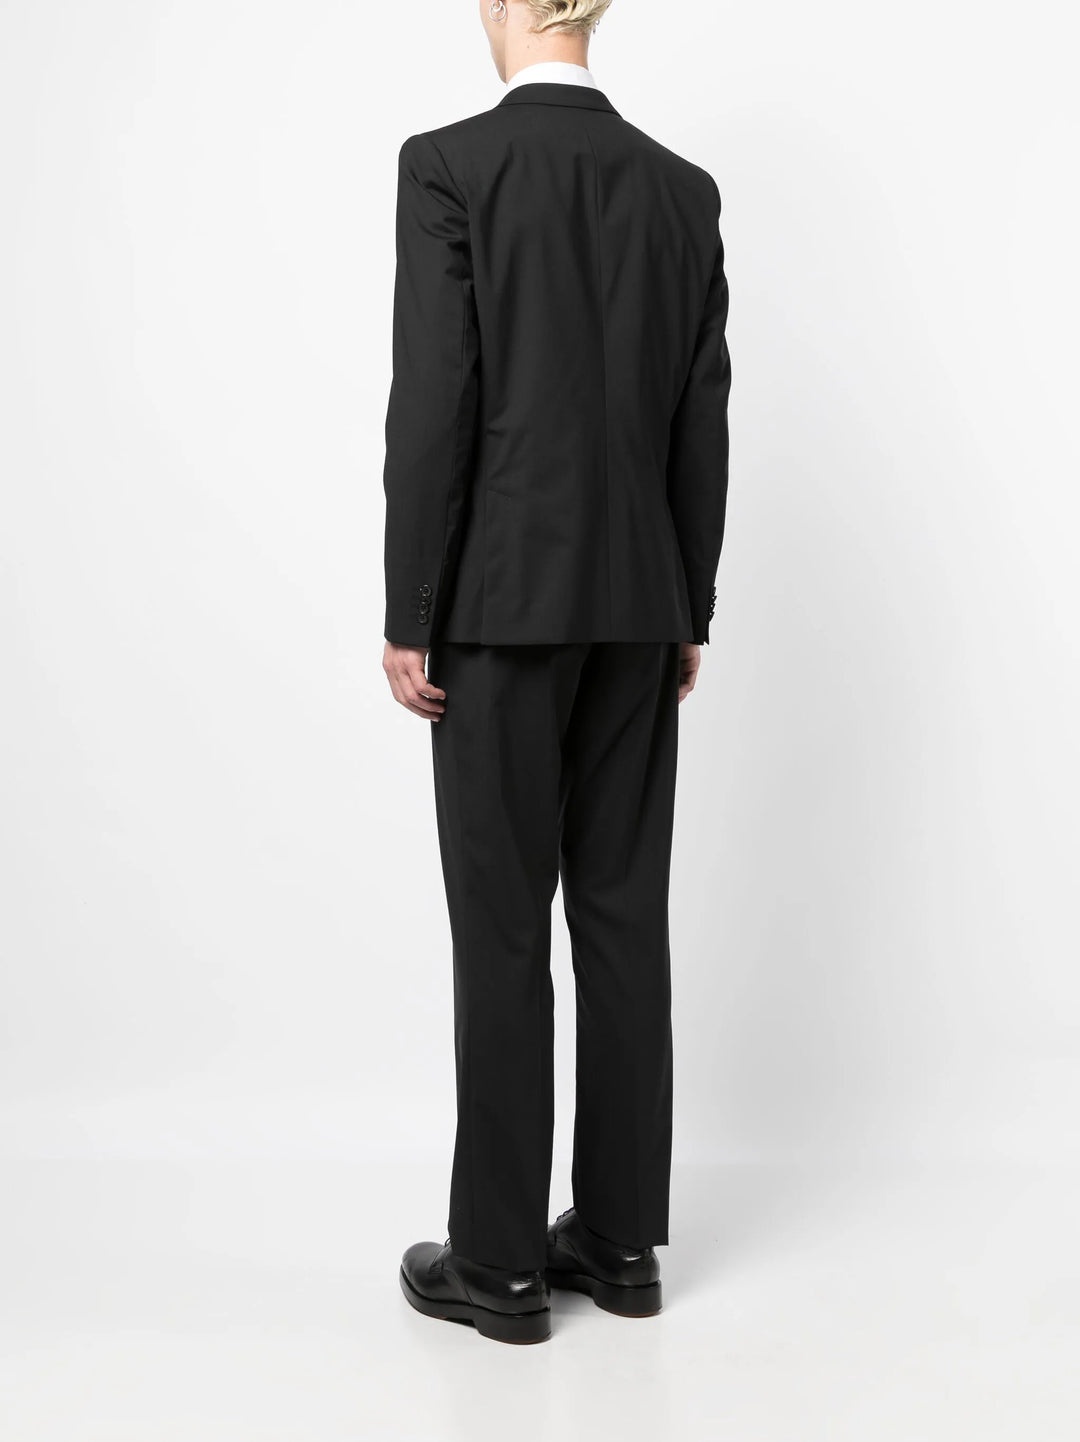 Mens Tailored Fit 2 Button Suit - 4